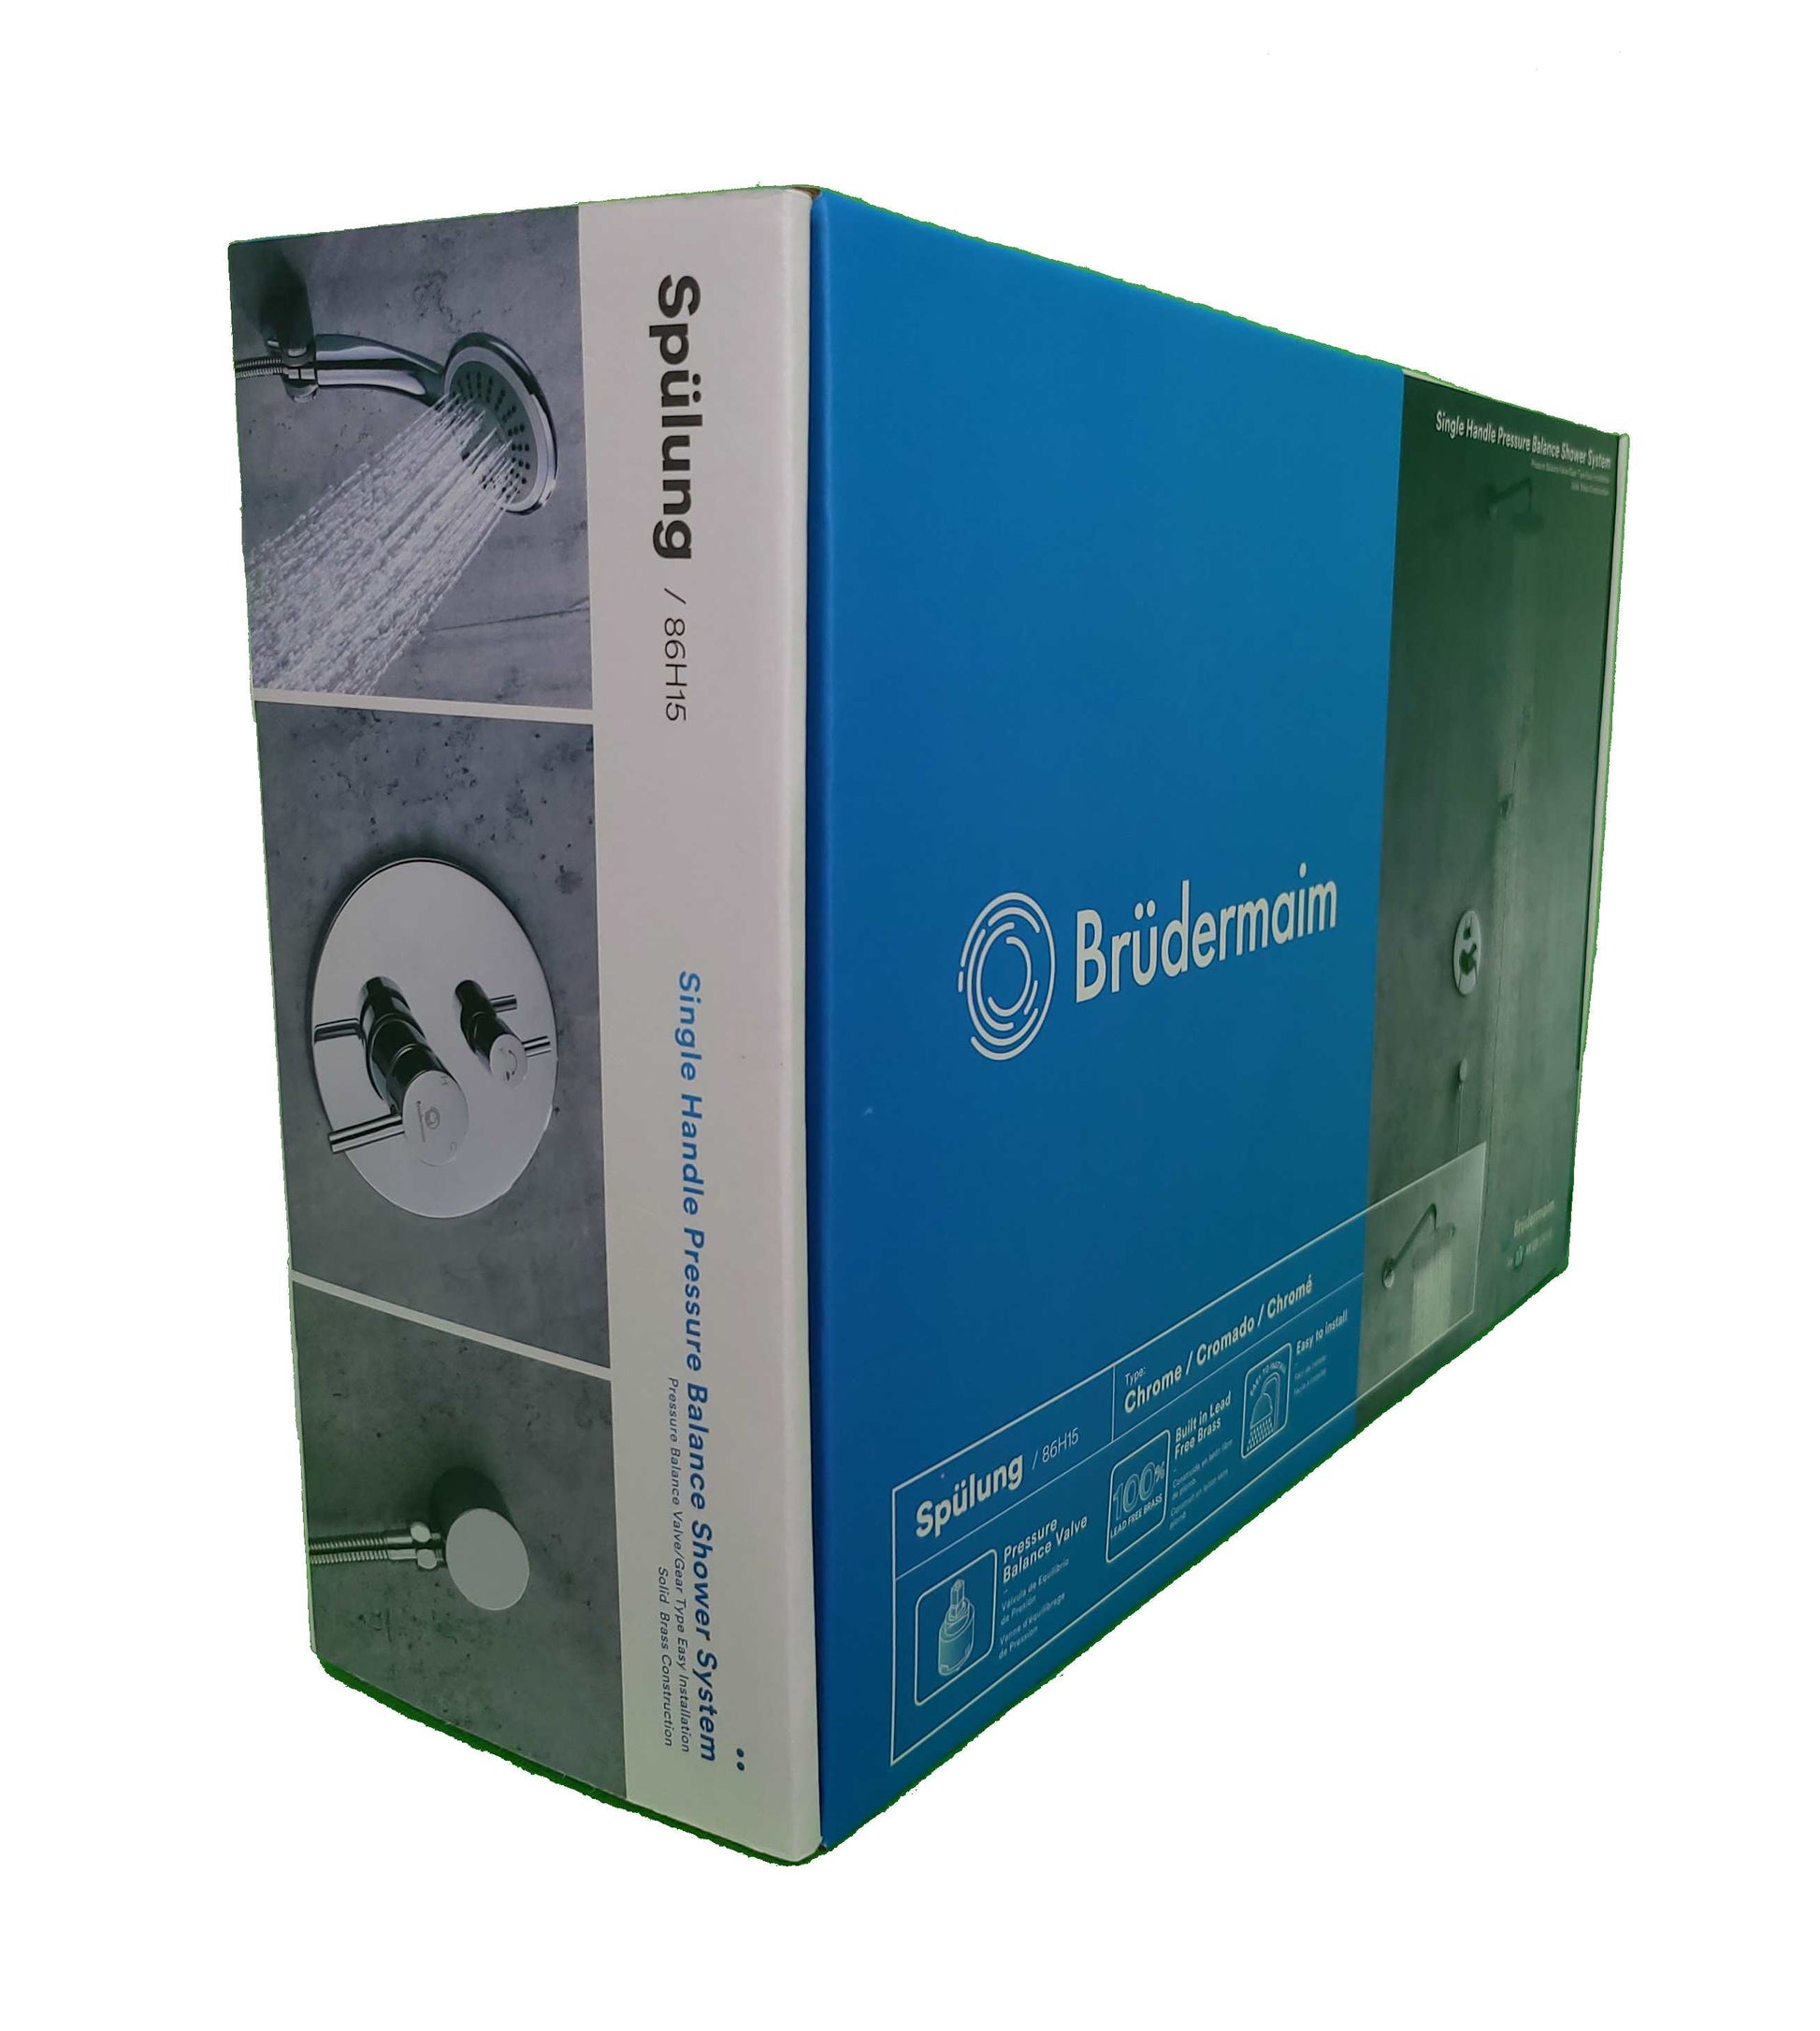 6pcs Box - Single Handle Pressure Balance Shower System - BRÜDERMAIM Spülung- Chrome - Lead Free Brass - cUPC Certified - Ceramic Cartridge